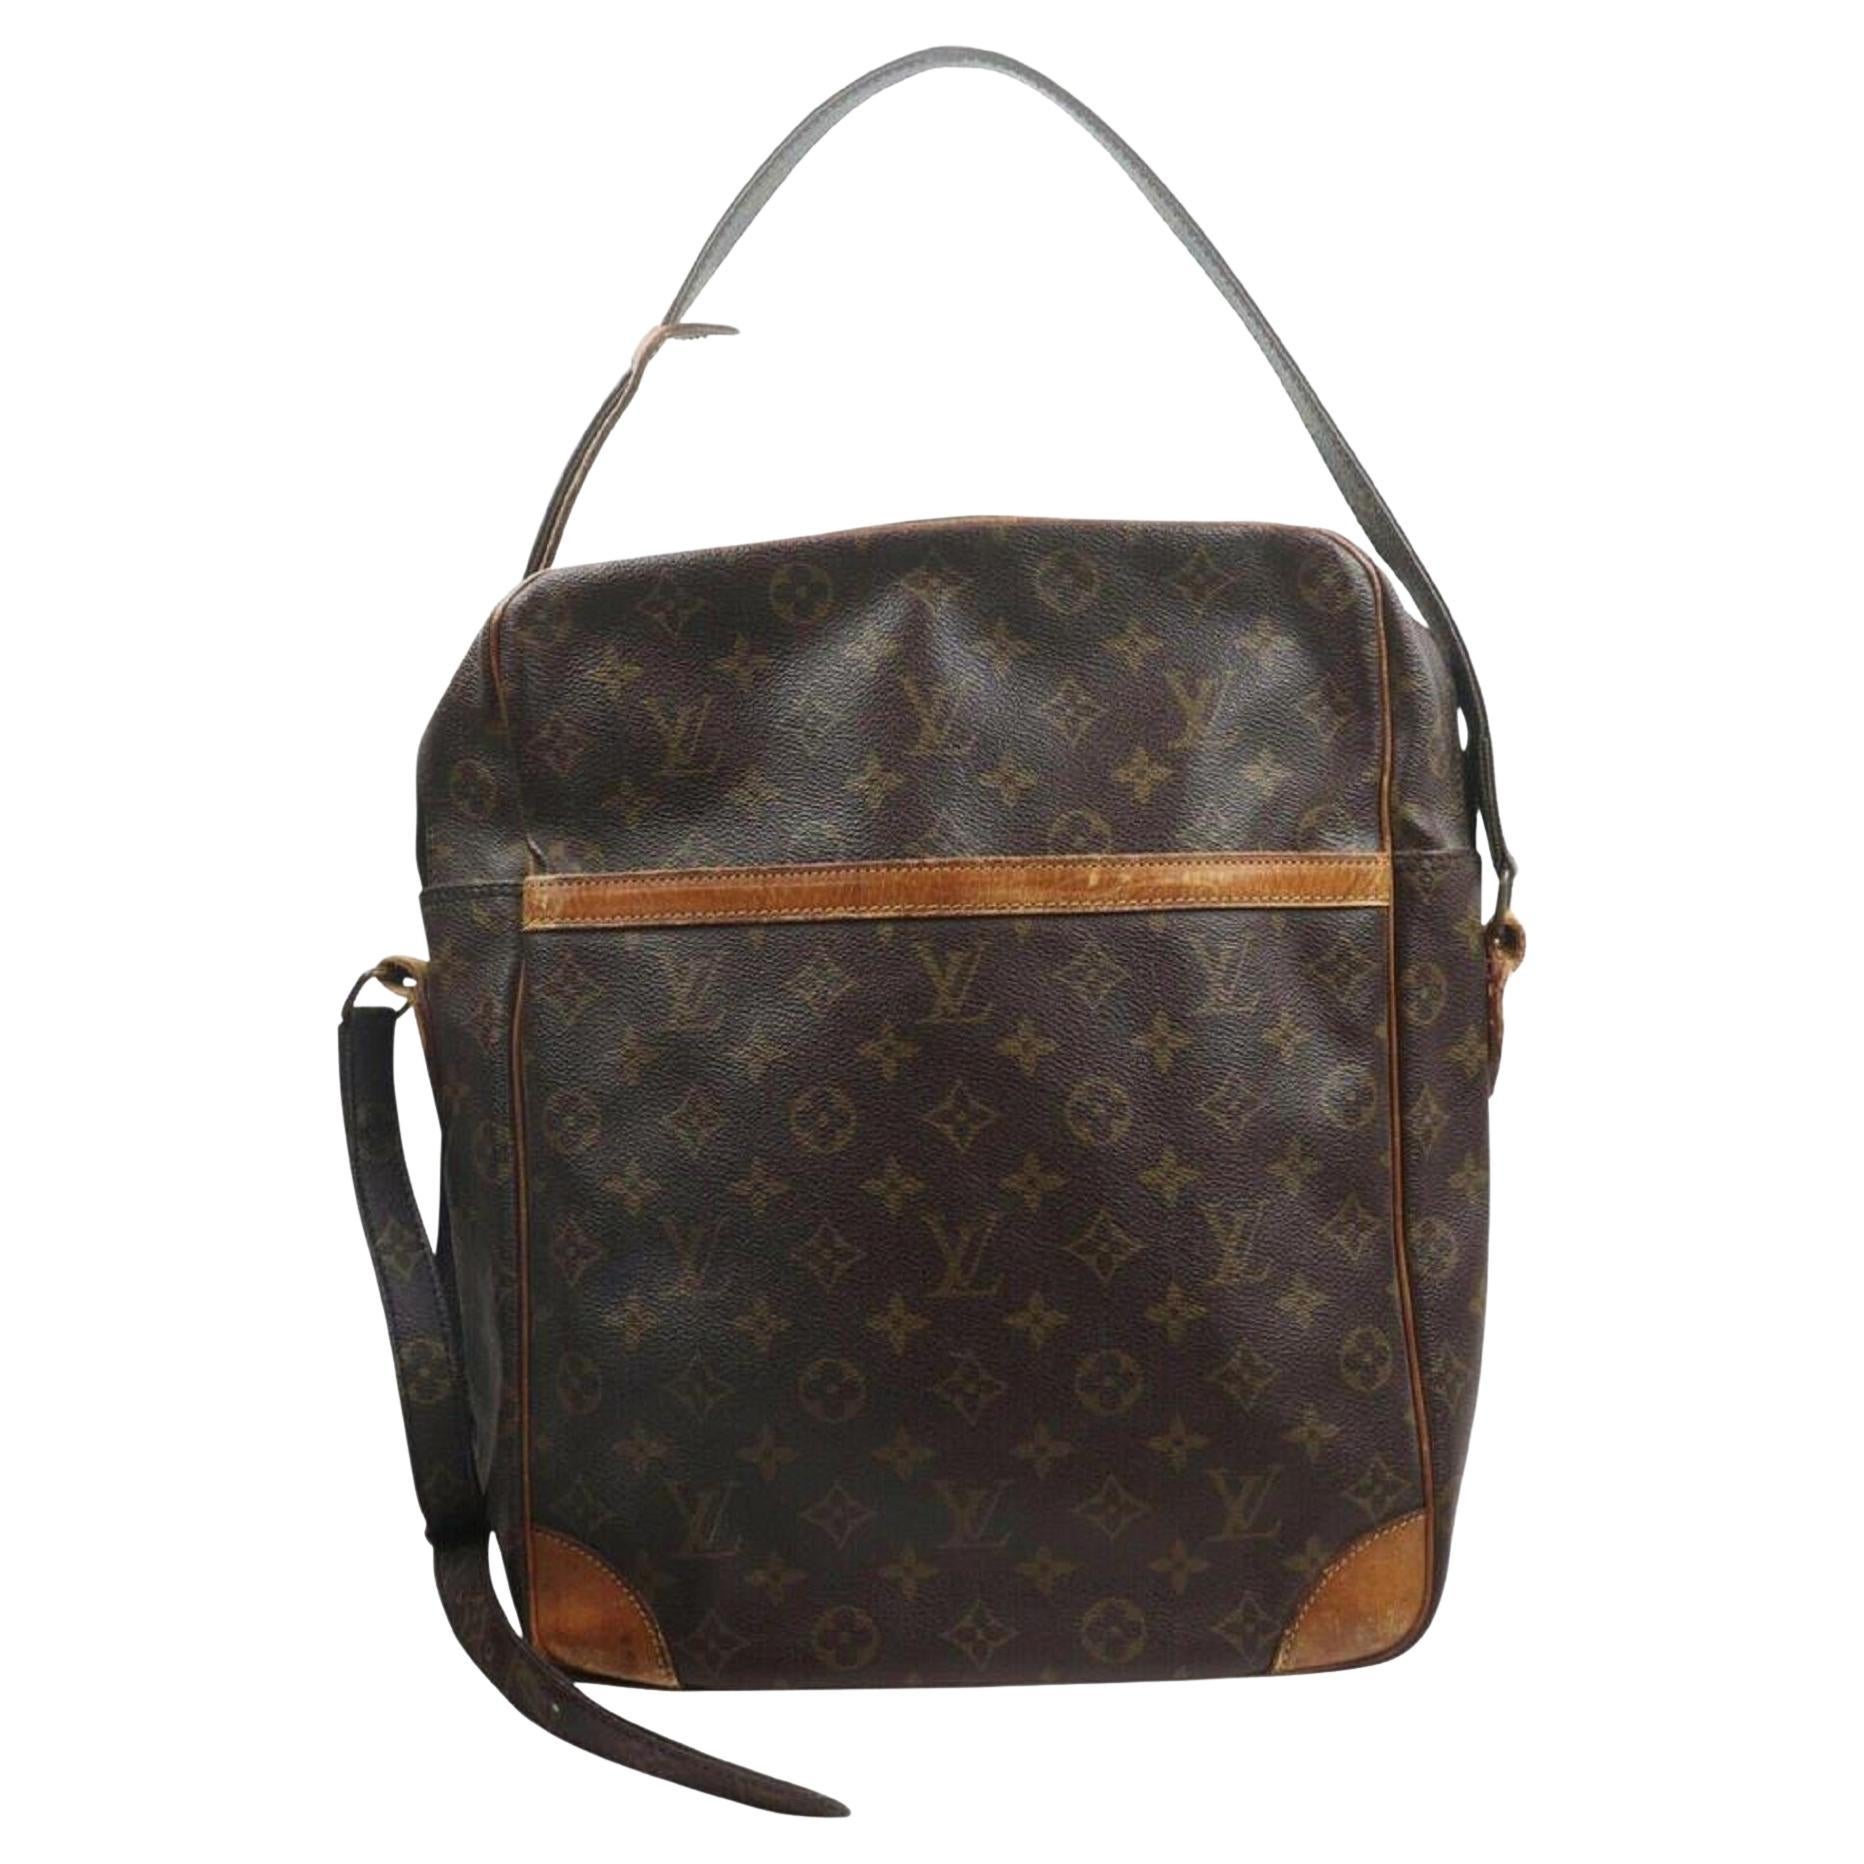 Bags, Auth Louis Vuitton Speedy 35 Rare Scarf Monogram Bag Showstopper